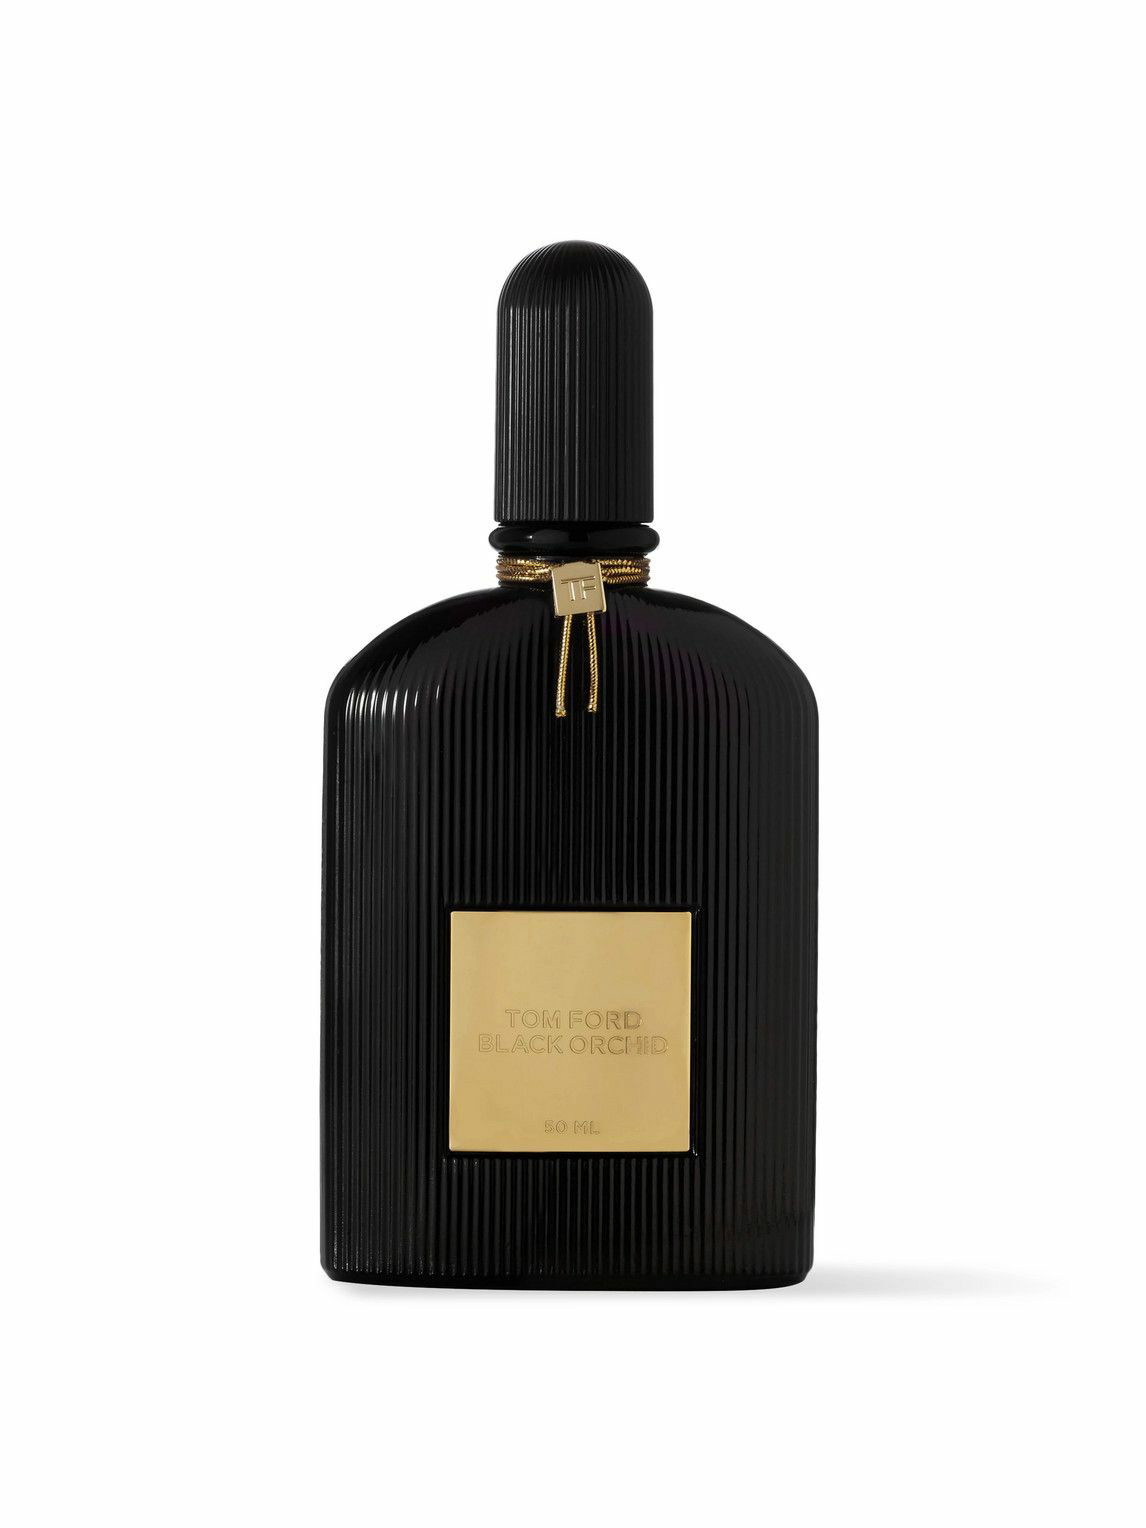 TOM FORD BEAUTY - Black Orchid Eau de Parfum TOM FORD BEAUTY